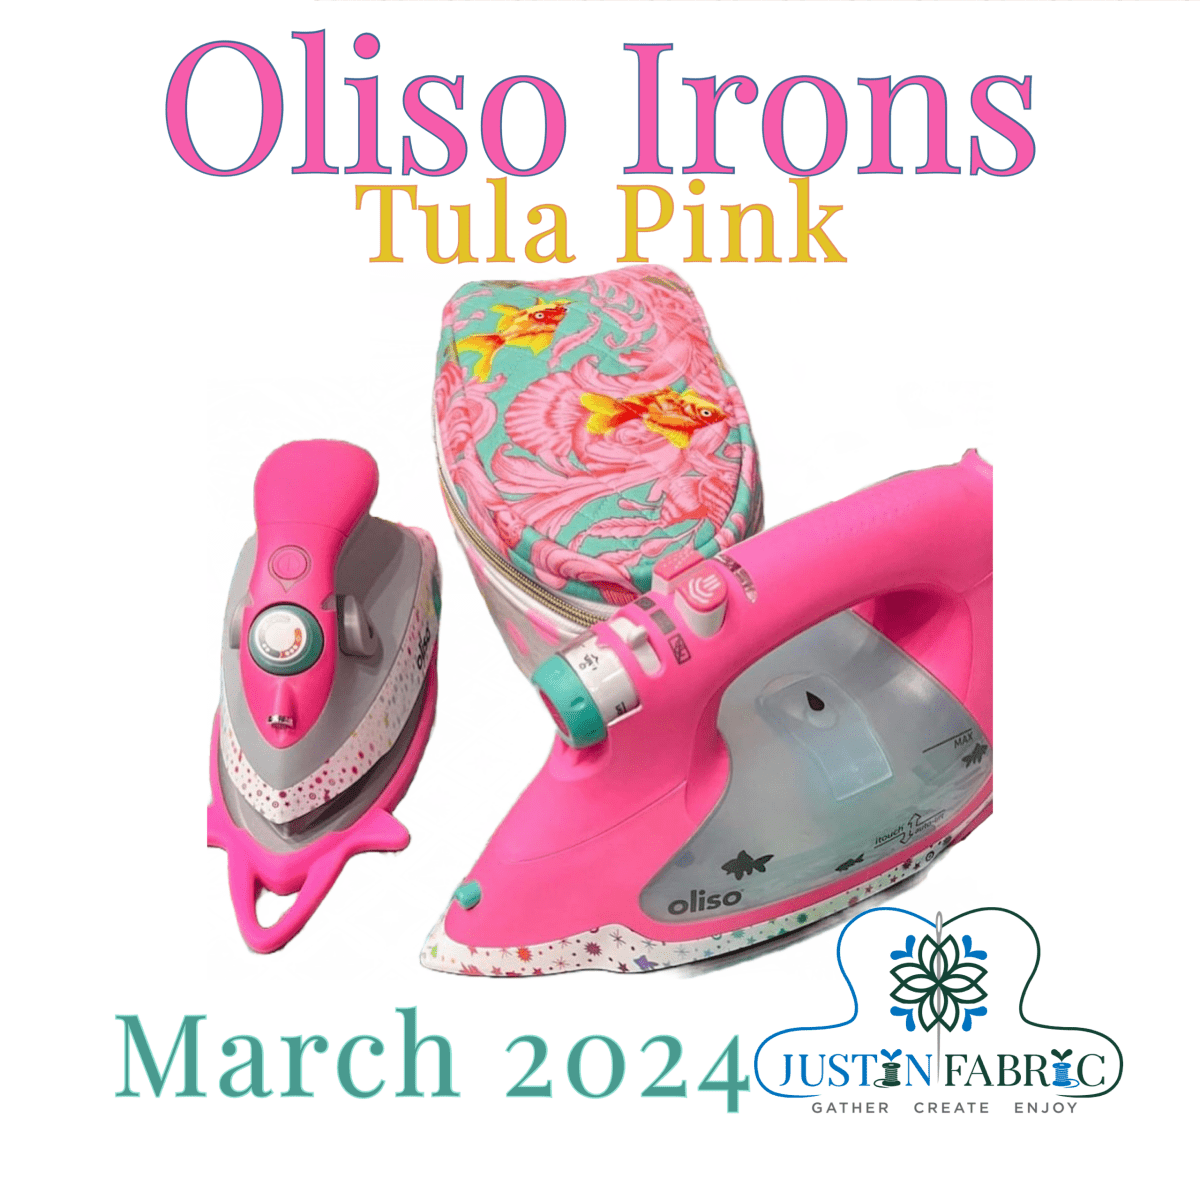 Oliso Irons, Tula Pink Editions